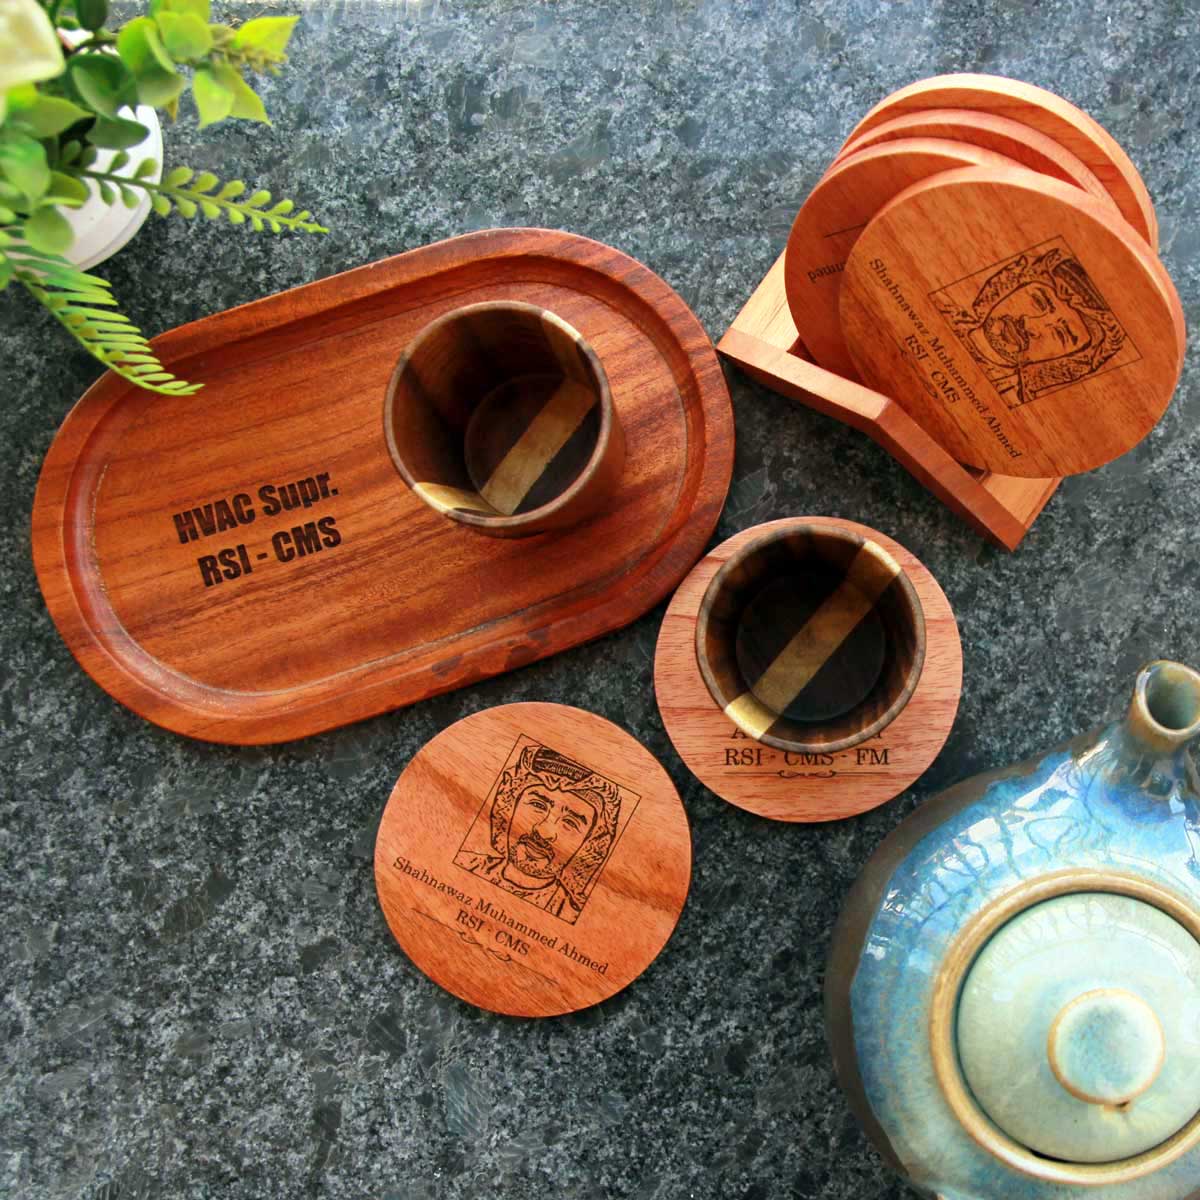 Tea Gift Set - Wooden Tea Cups, Tea Tray and Coaster set